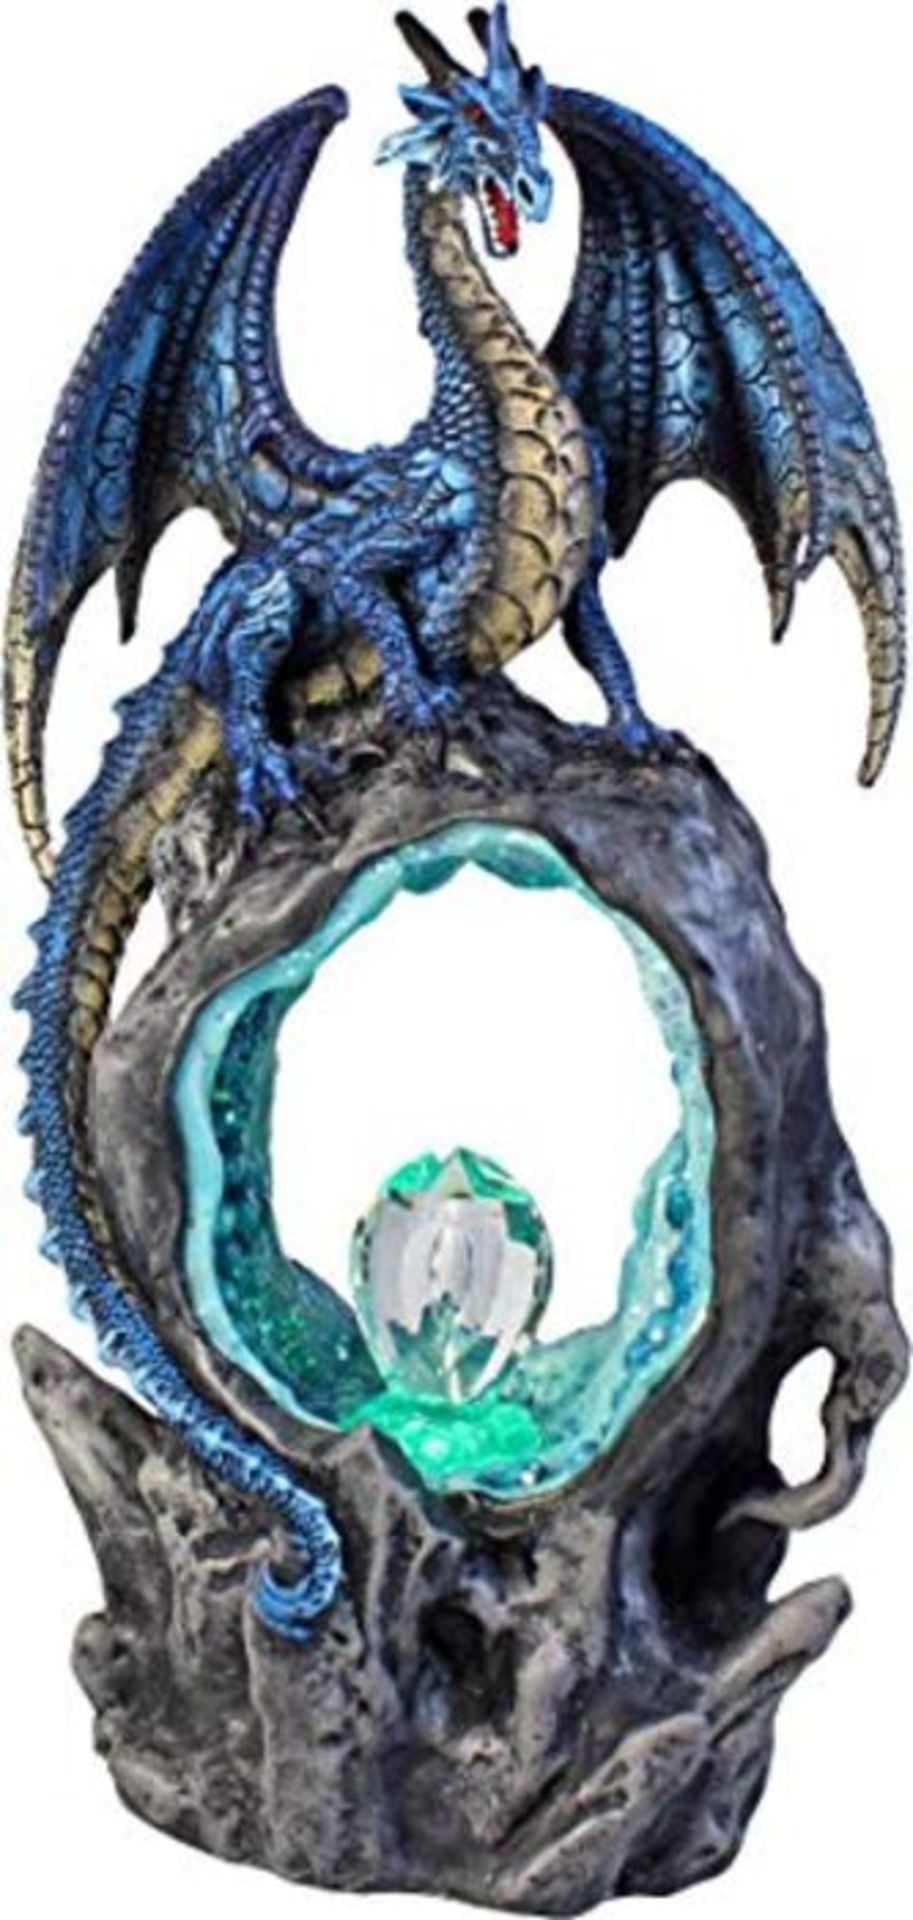 [CRACKED] Nemesis Now U2470G6 Blue Frostwing's Gateway Figurine 31cm, Polyresin